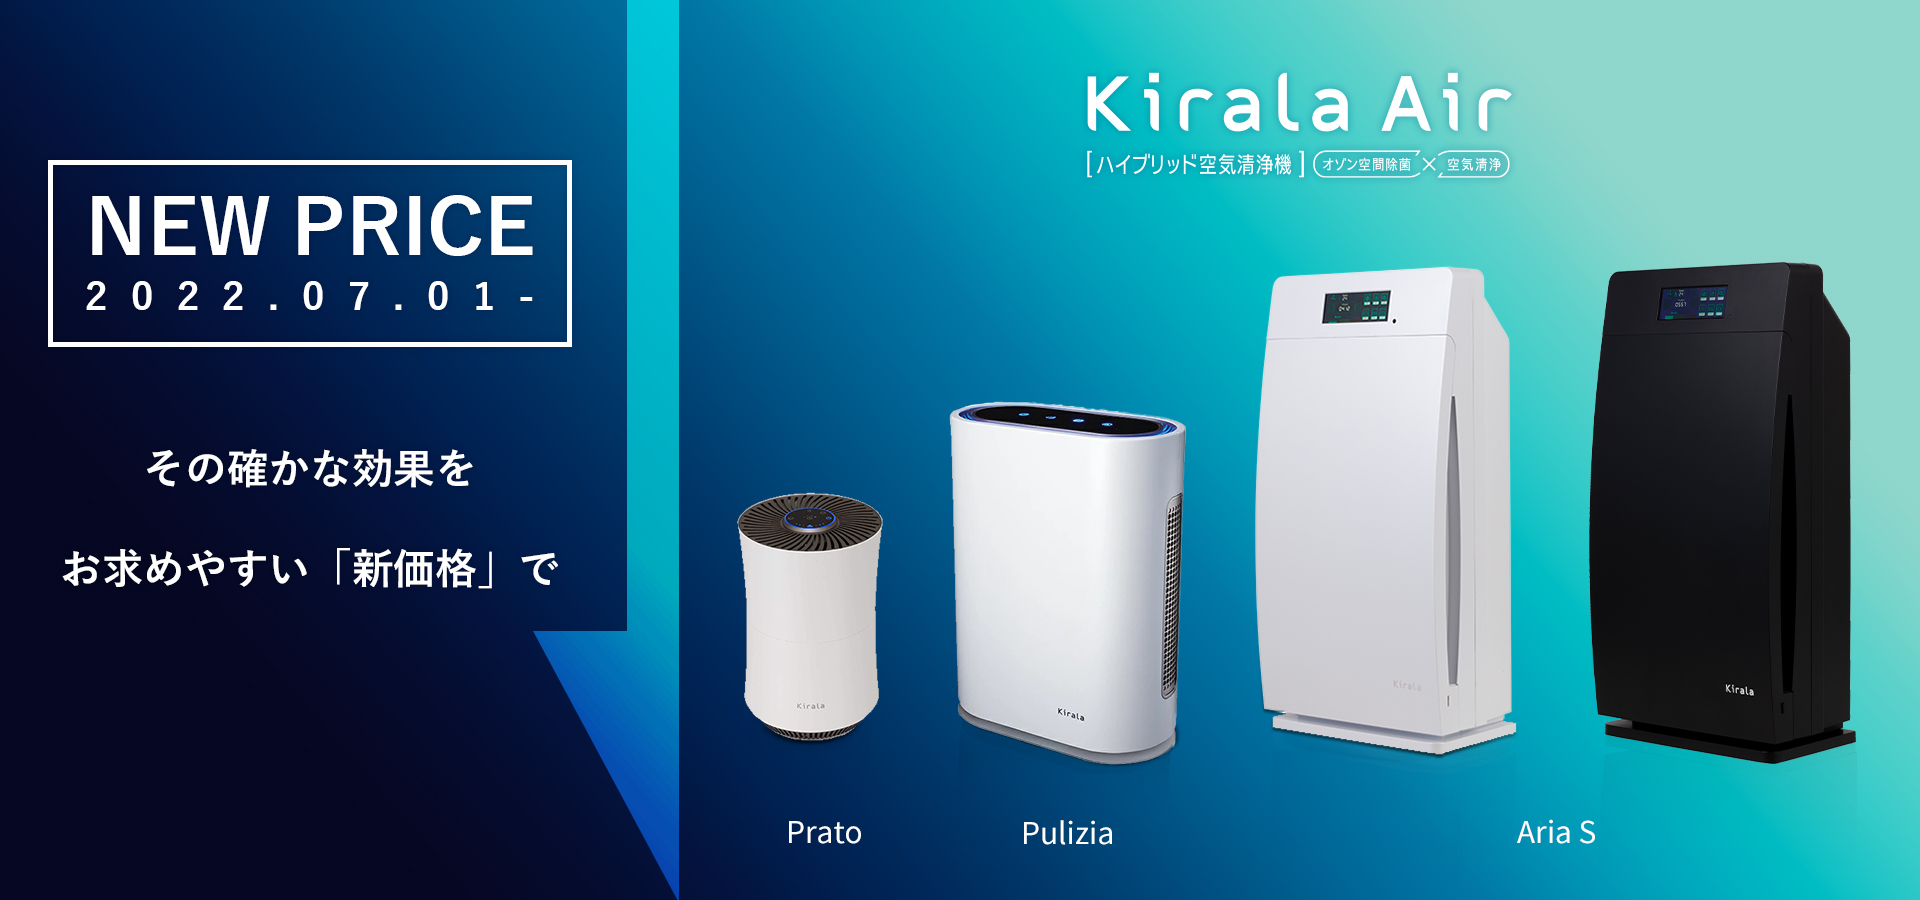 「Kirala Air」人気のハイブリッド空気清浄機3機種の新価格を発表 